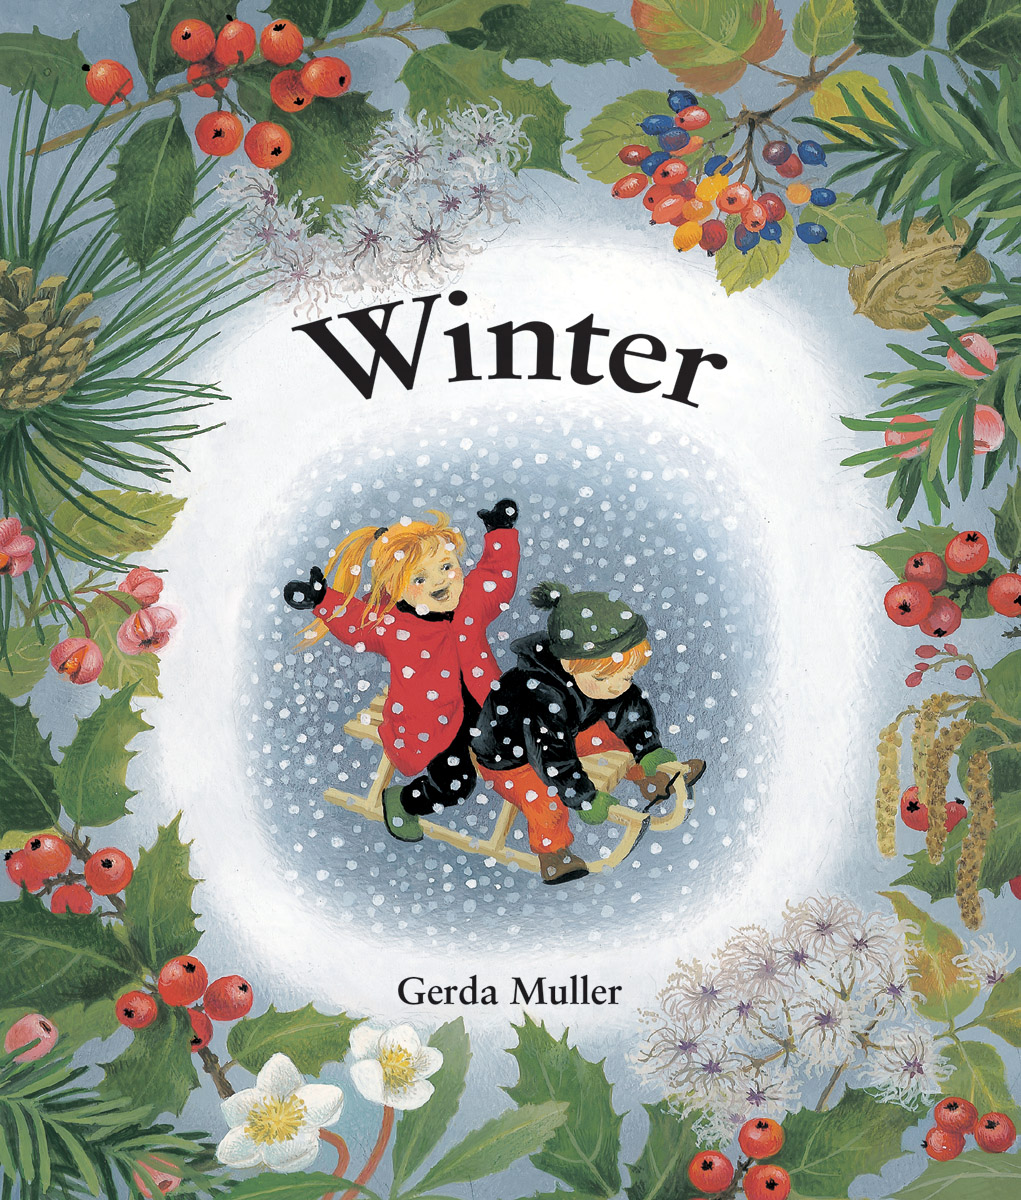 Gerda Muller, Winter cover image